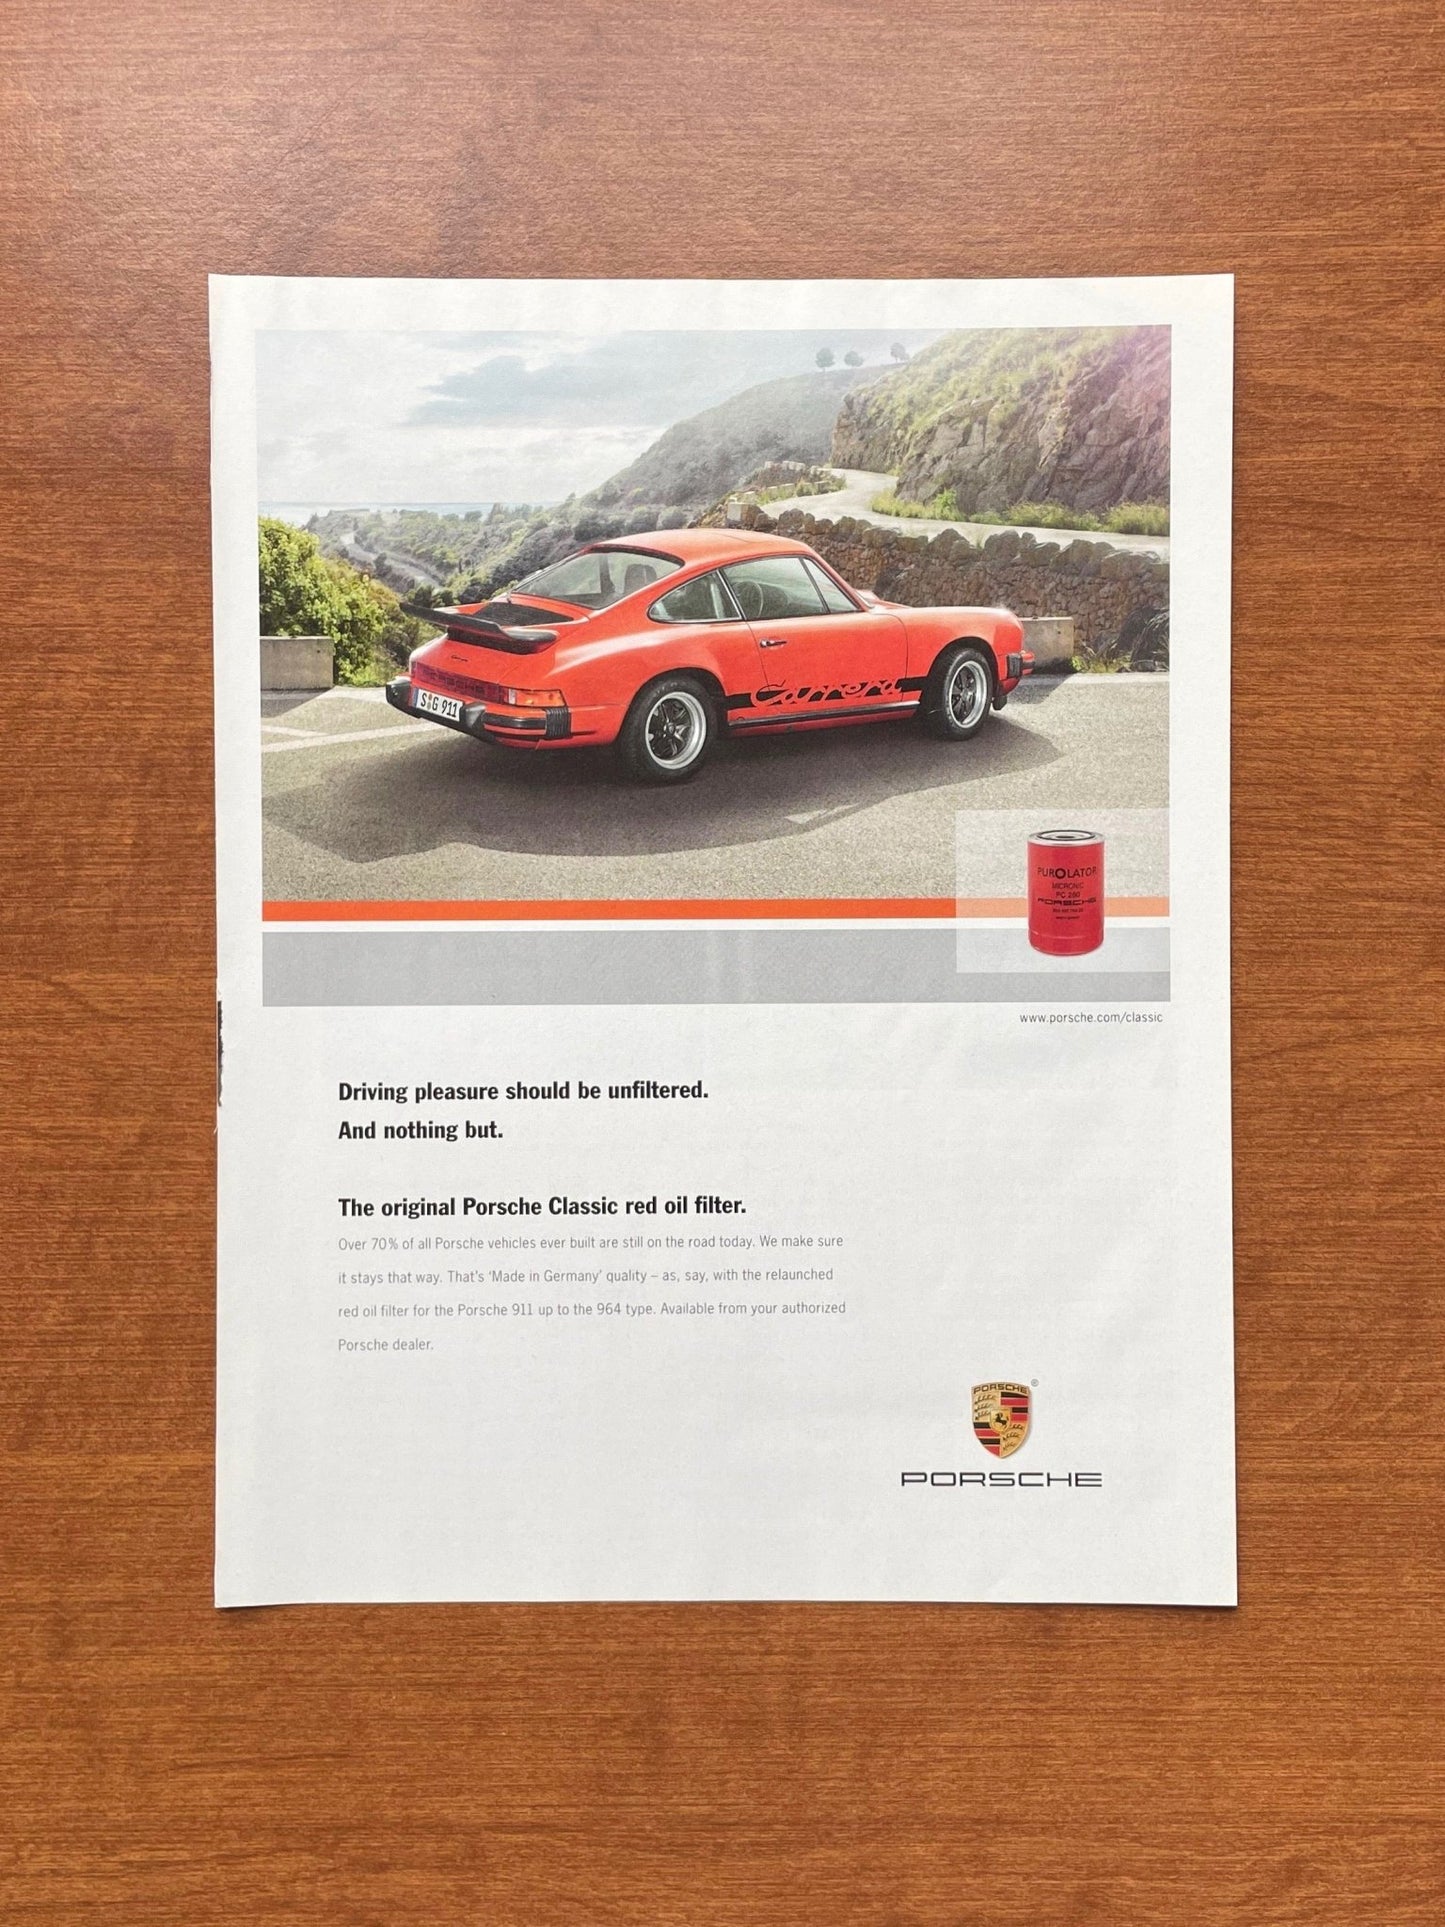 2014 Porsche "Driving pleasure should be unfiltered." Advertisement